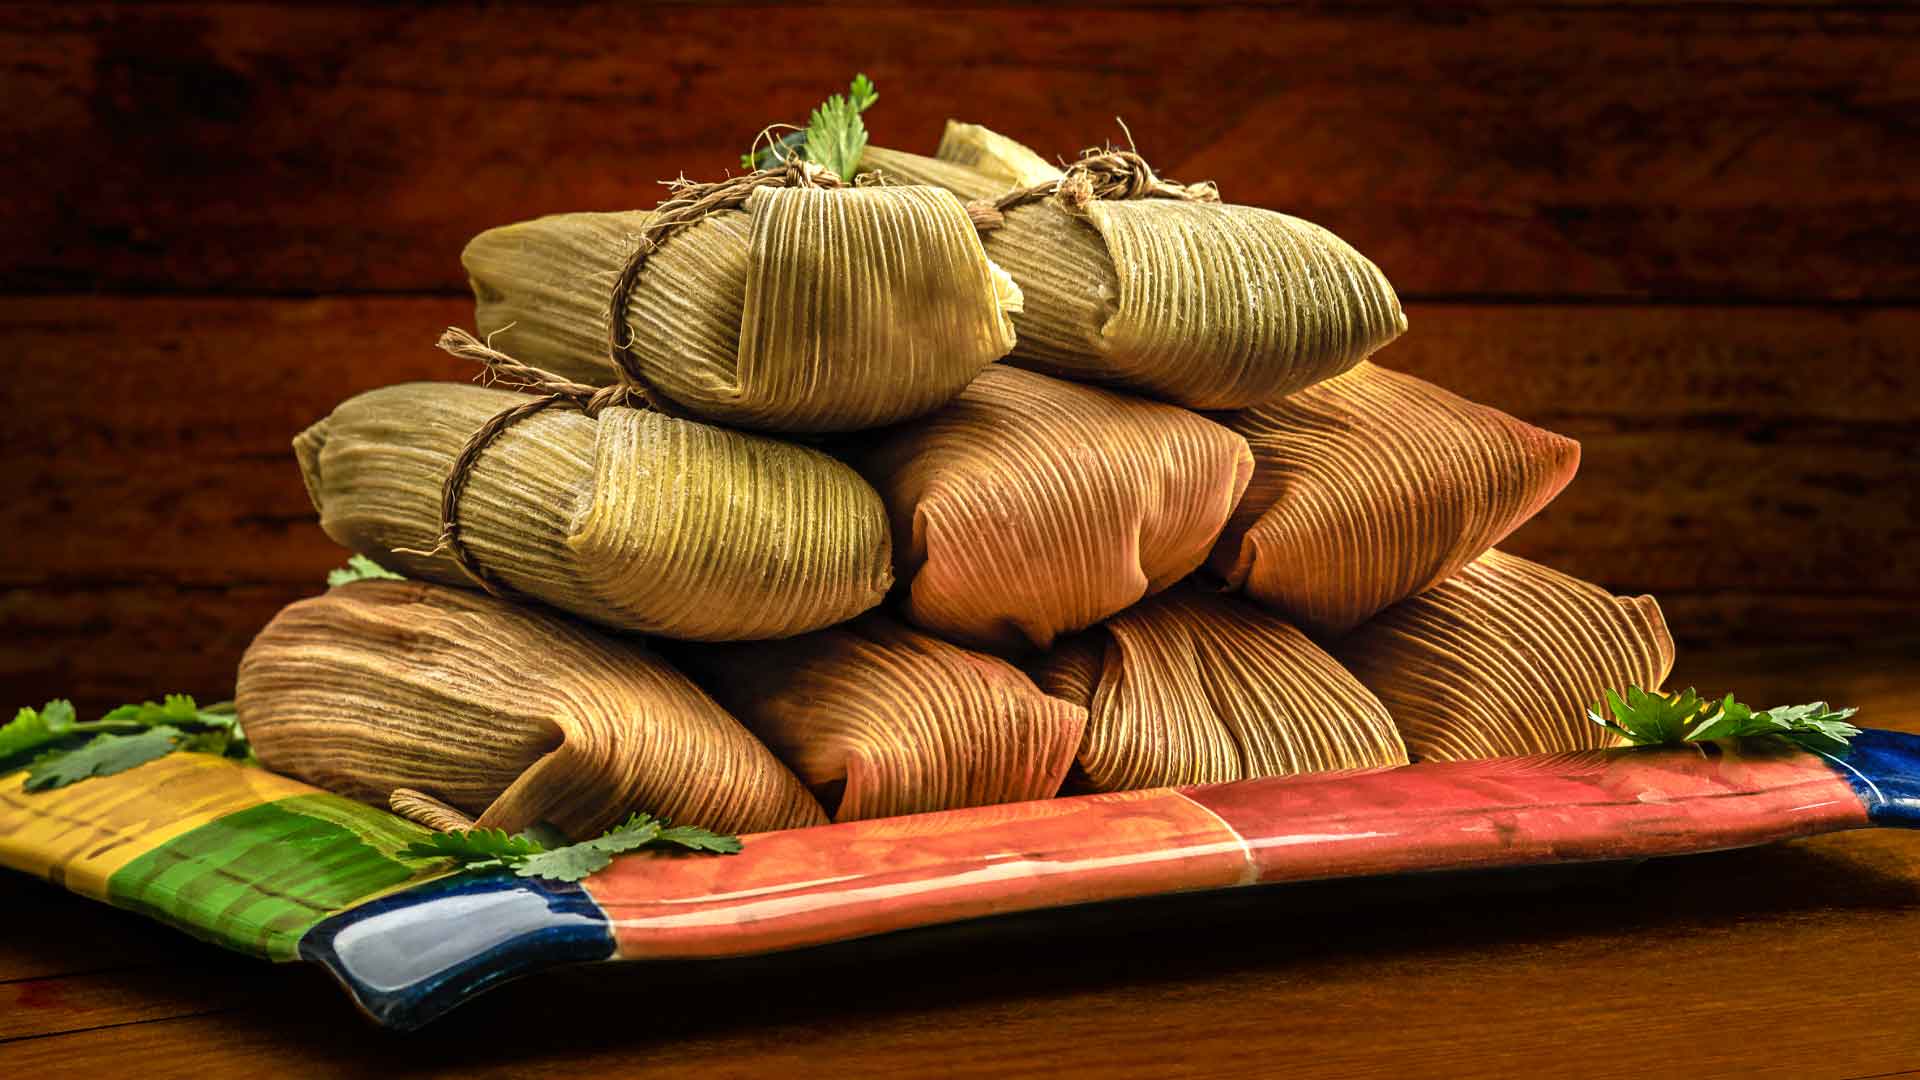 Tamales - taste sensation wrapped in a corn leaf